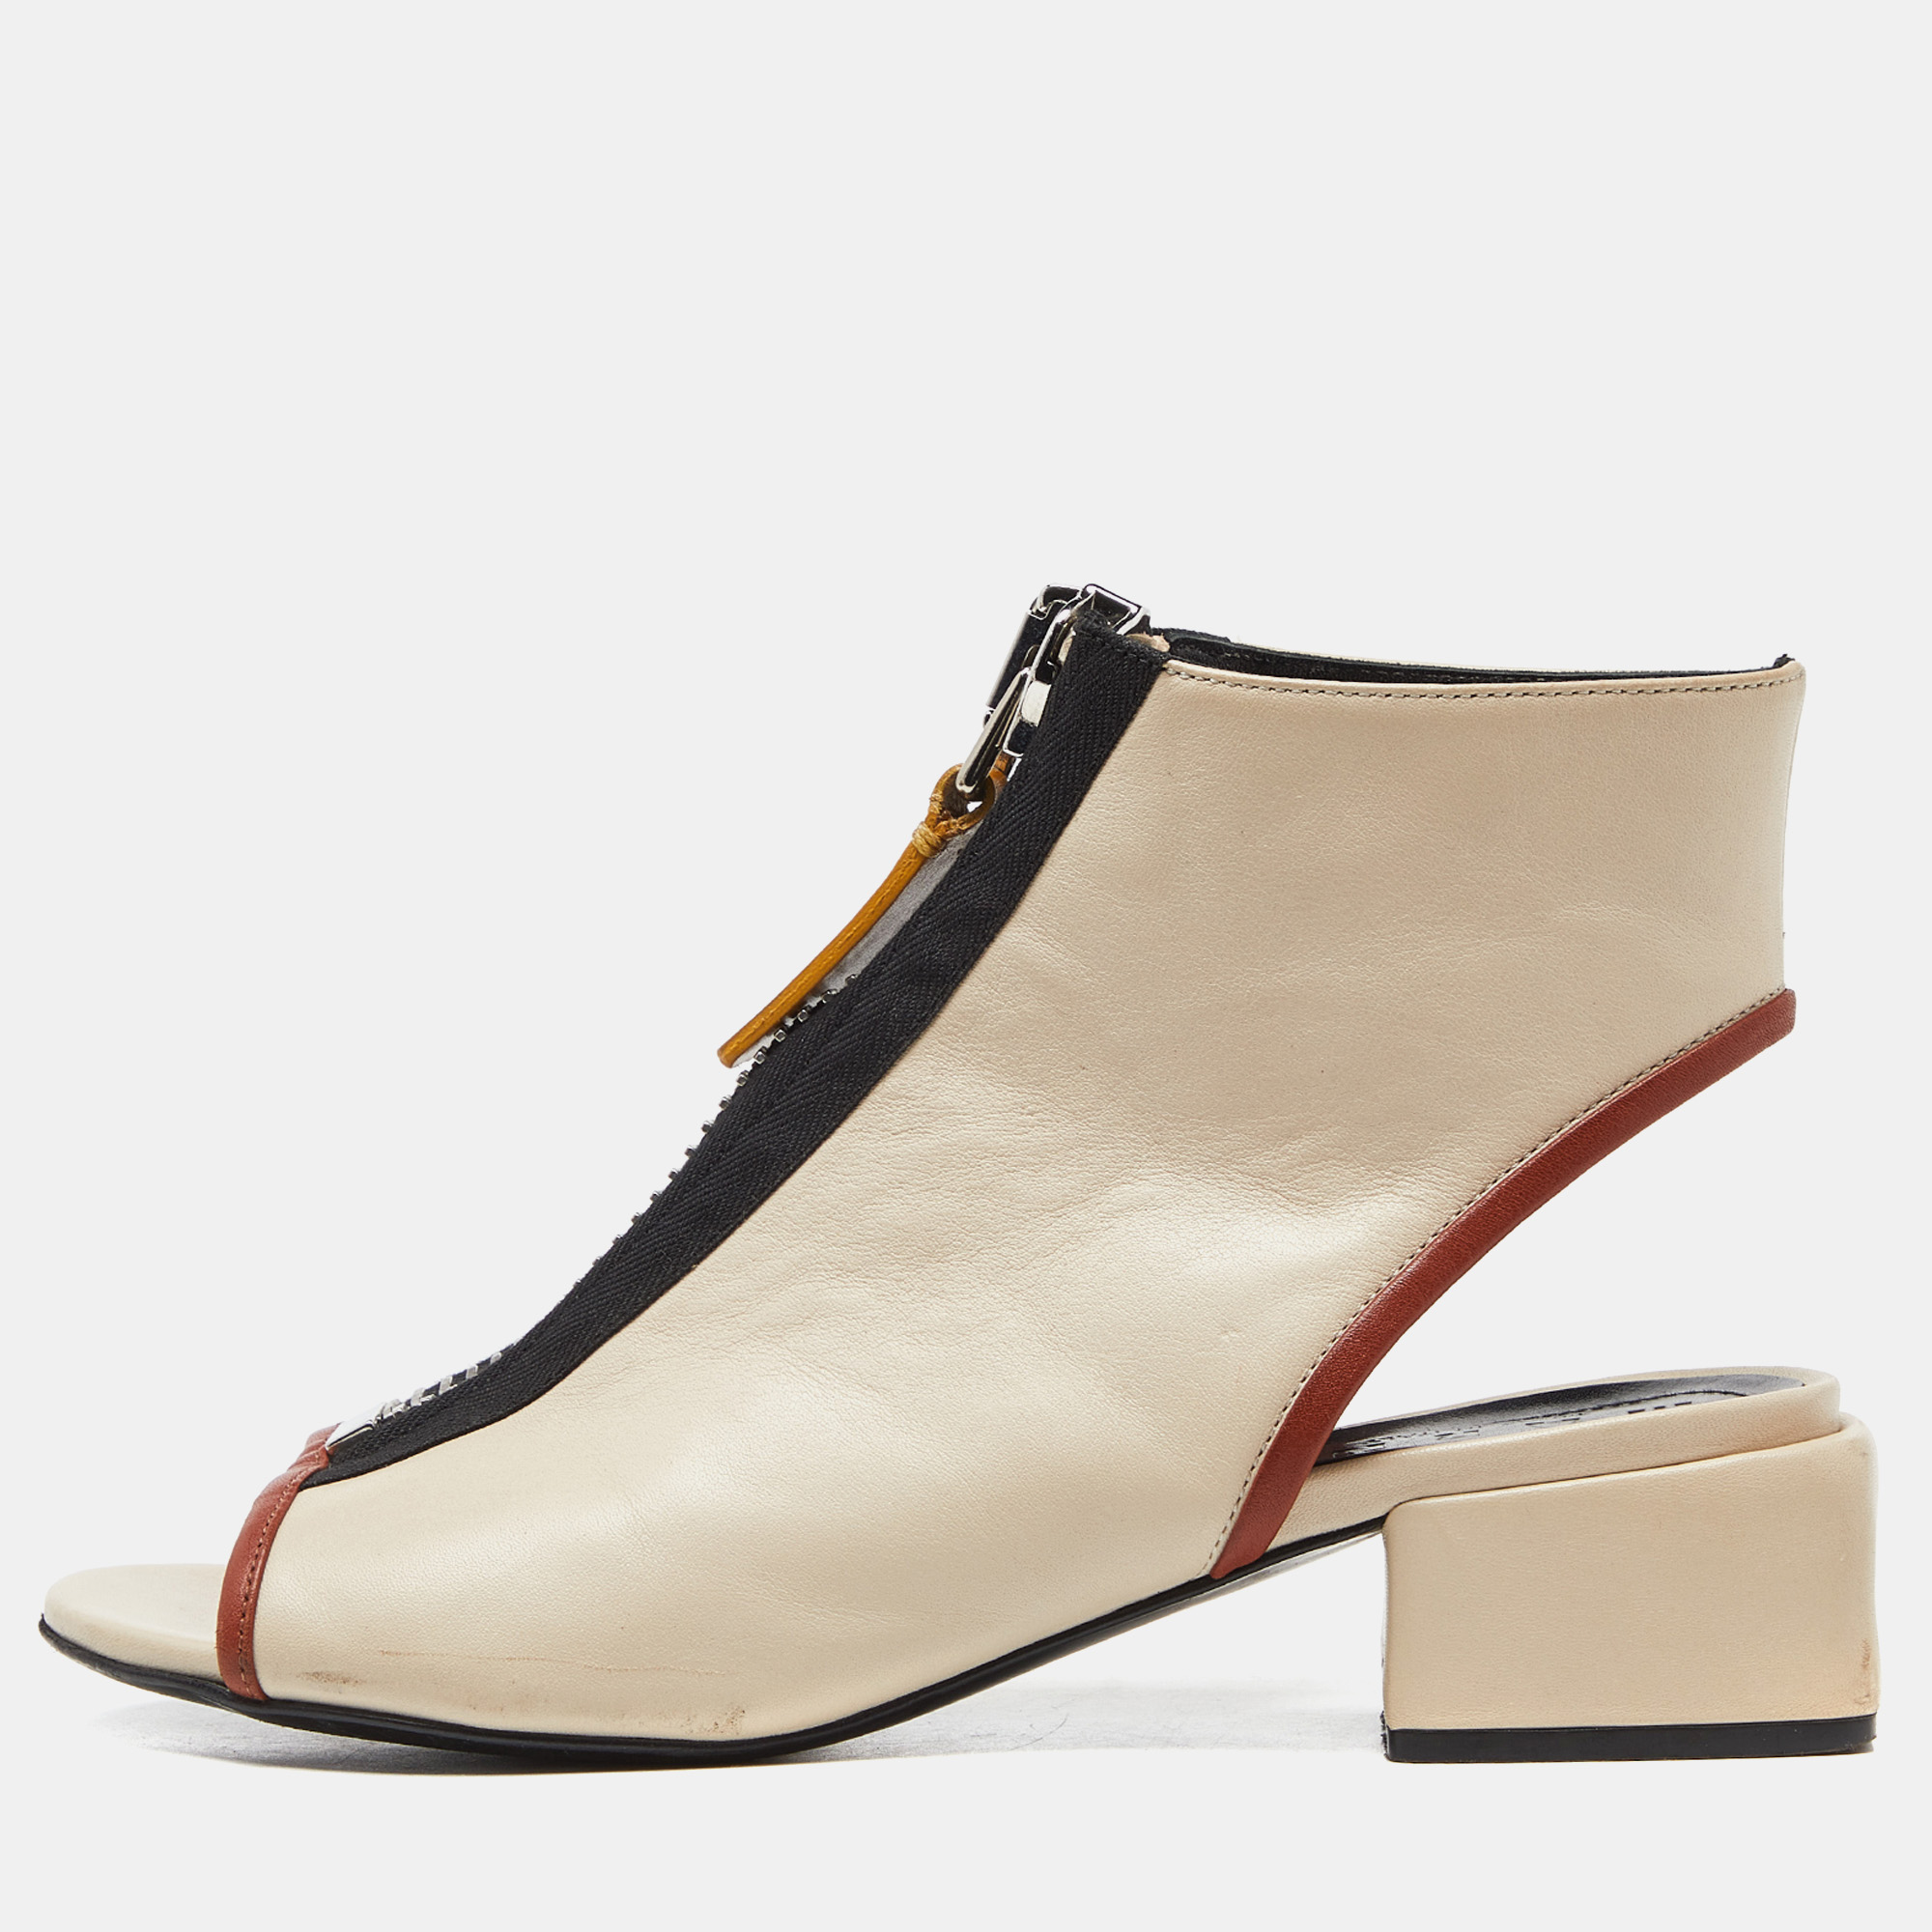 Marni cream/black leather zip detail open toe slingback sandals size 35